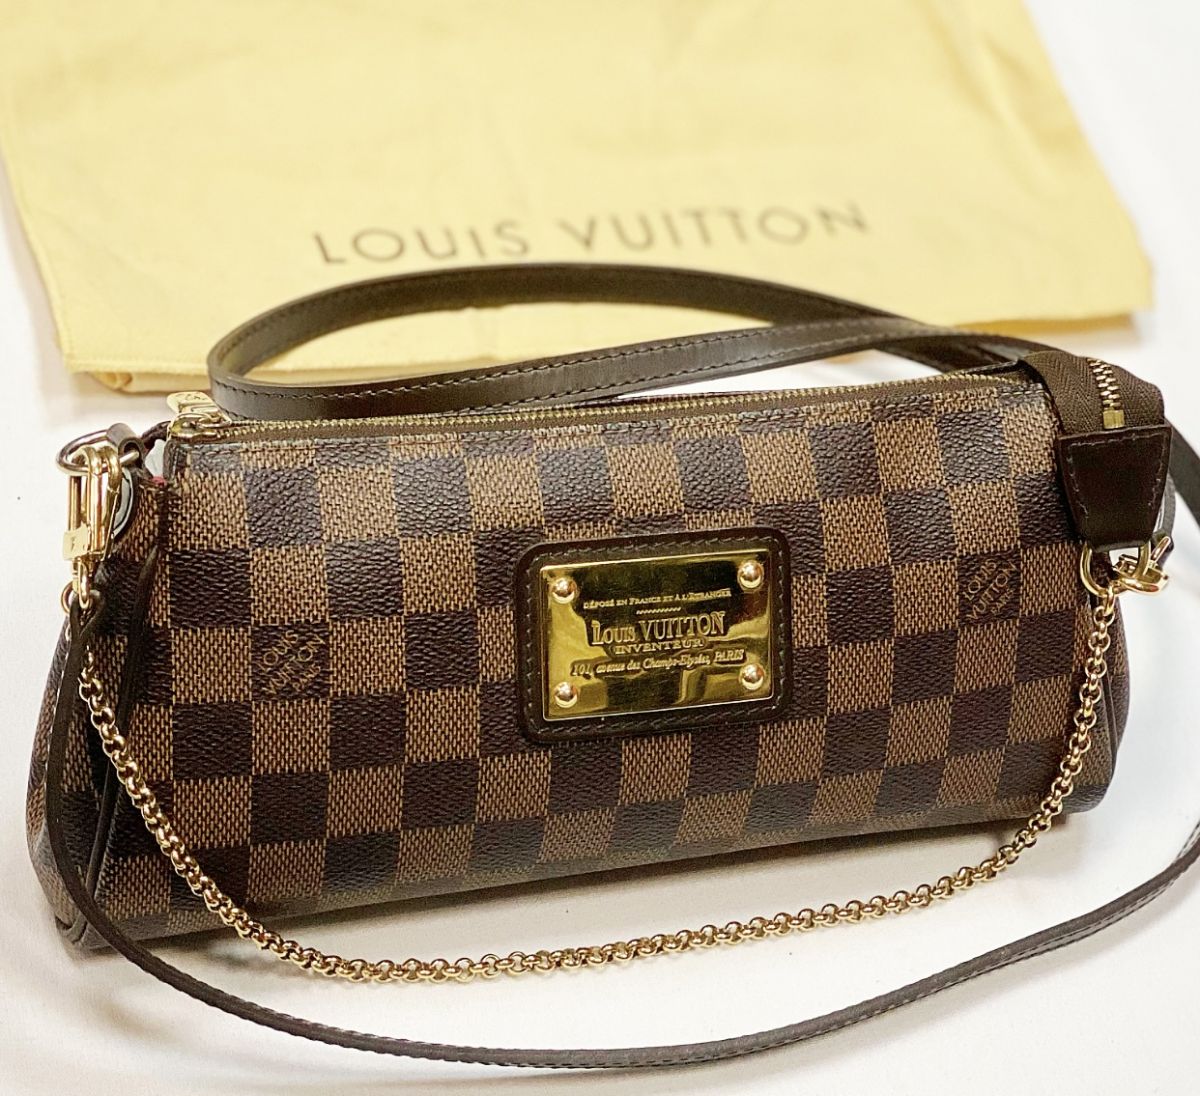 Сумка Louis Vuitton размер 25/12 цена 30 770 руб